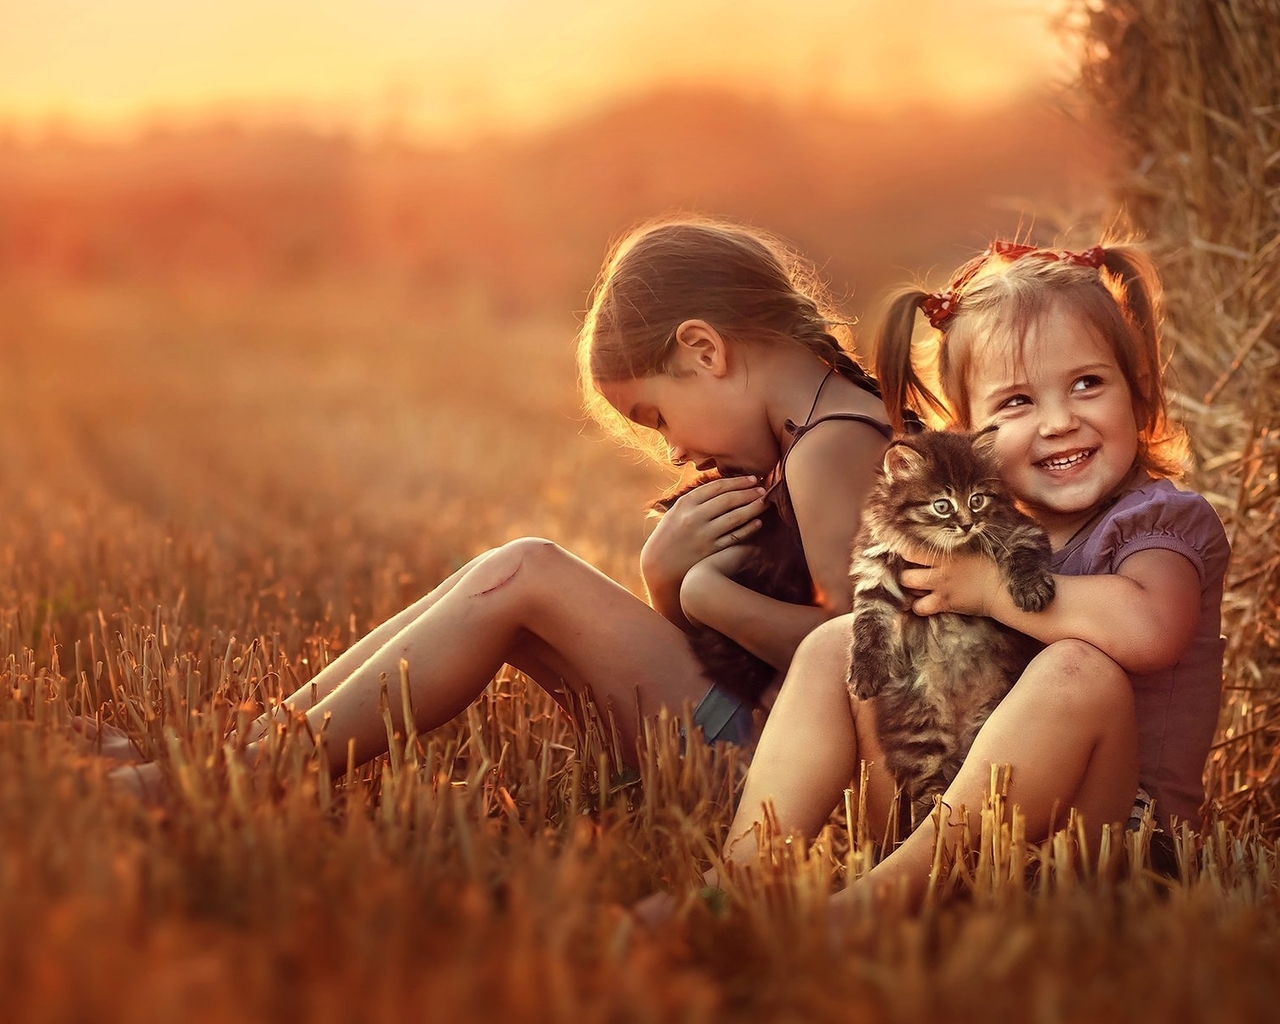 Картинка: Девочки, две, сидят, поле, сено, стог, кошки, закат, доброта, улыбка, настроение